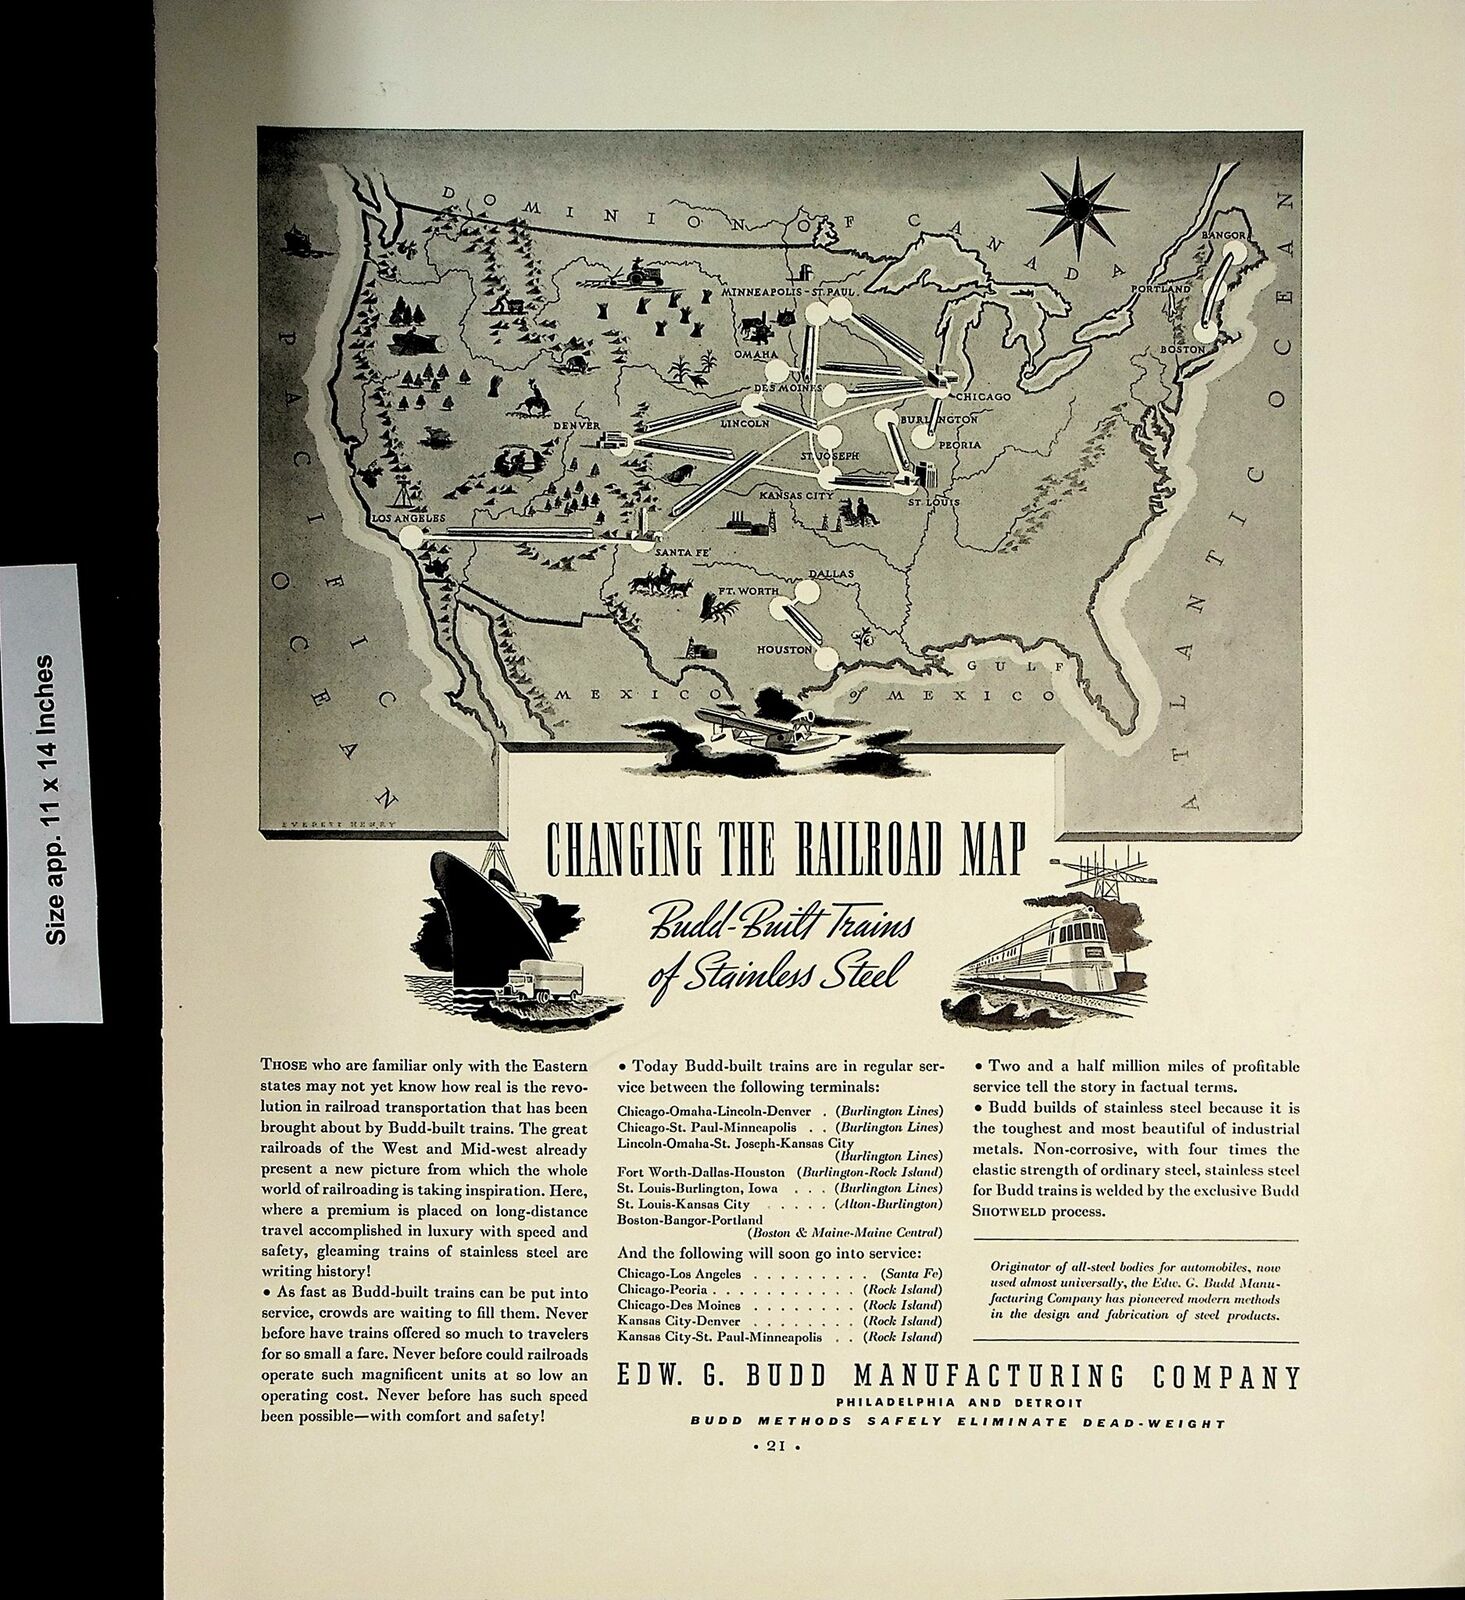 1937 Edw G Budd Manufacturing Co Railroad Map Vintage Print Ad 5907